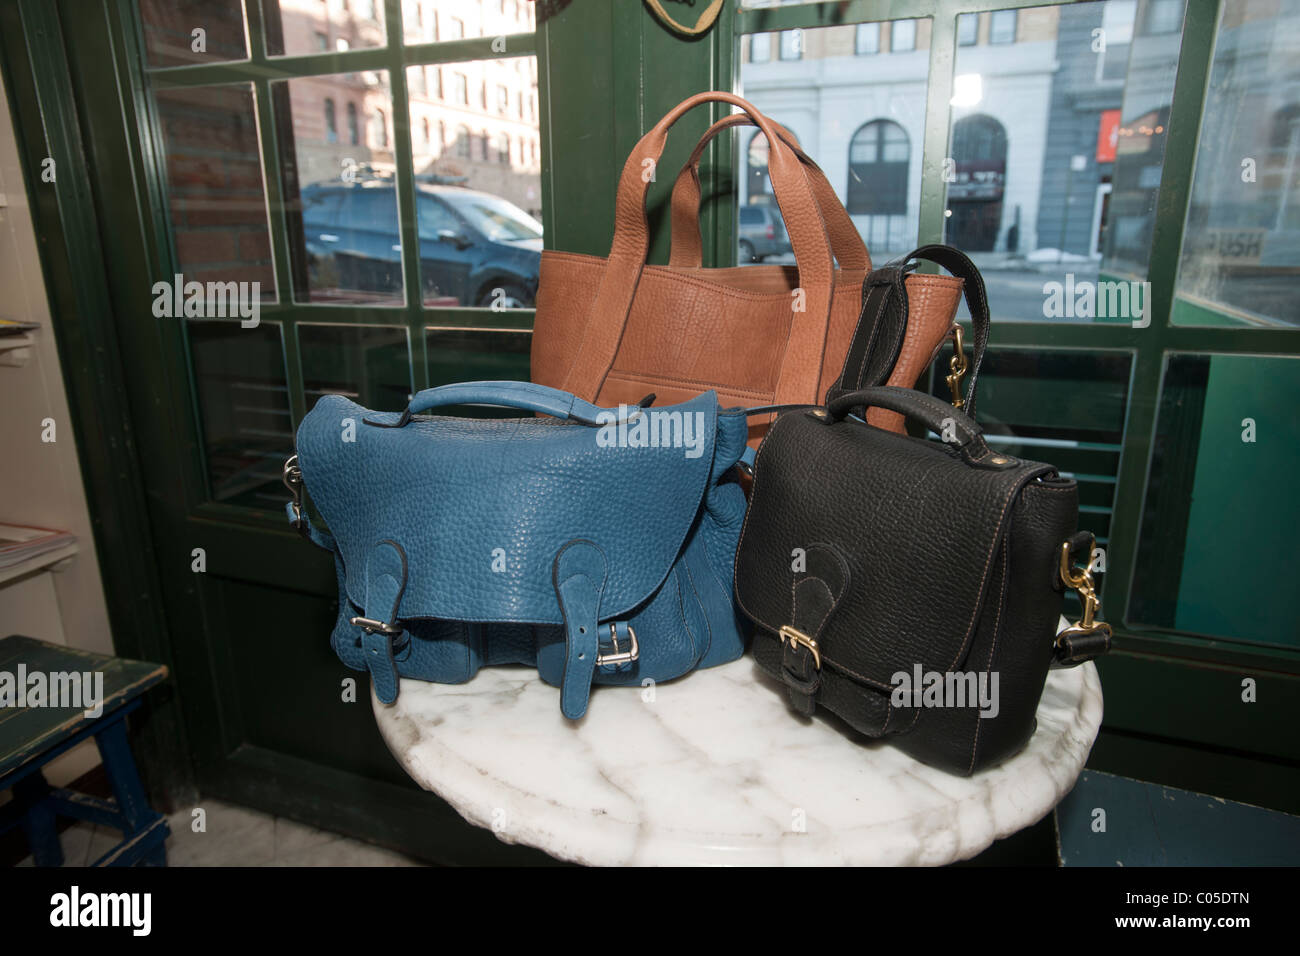 Breton tote bags in New York Stock Photo